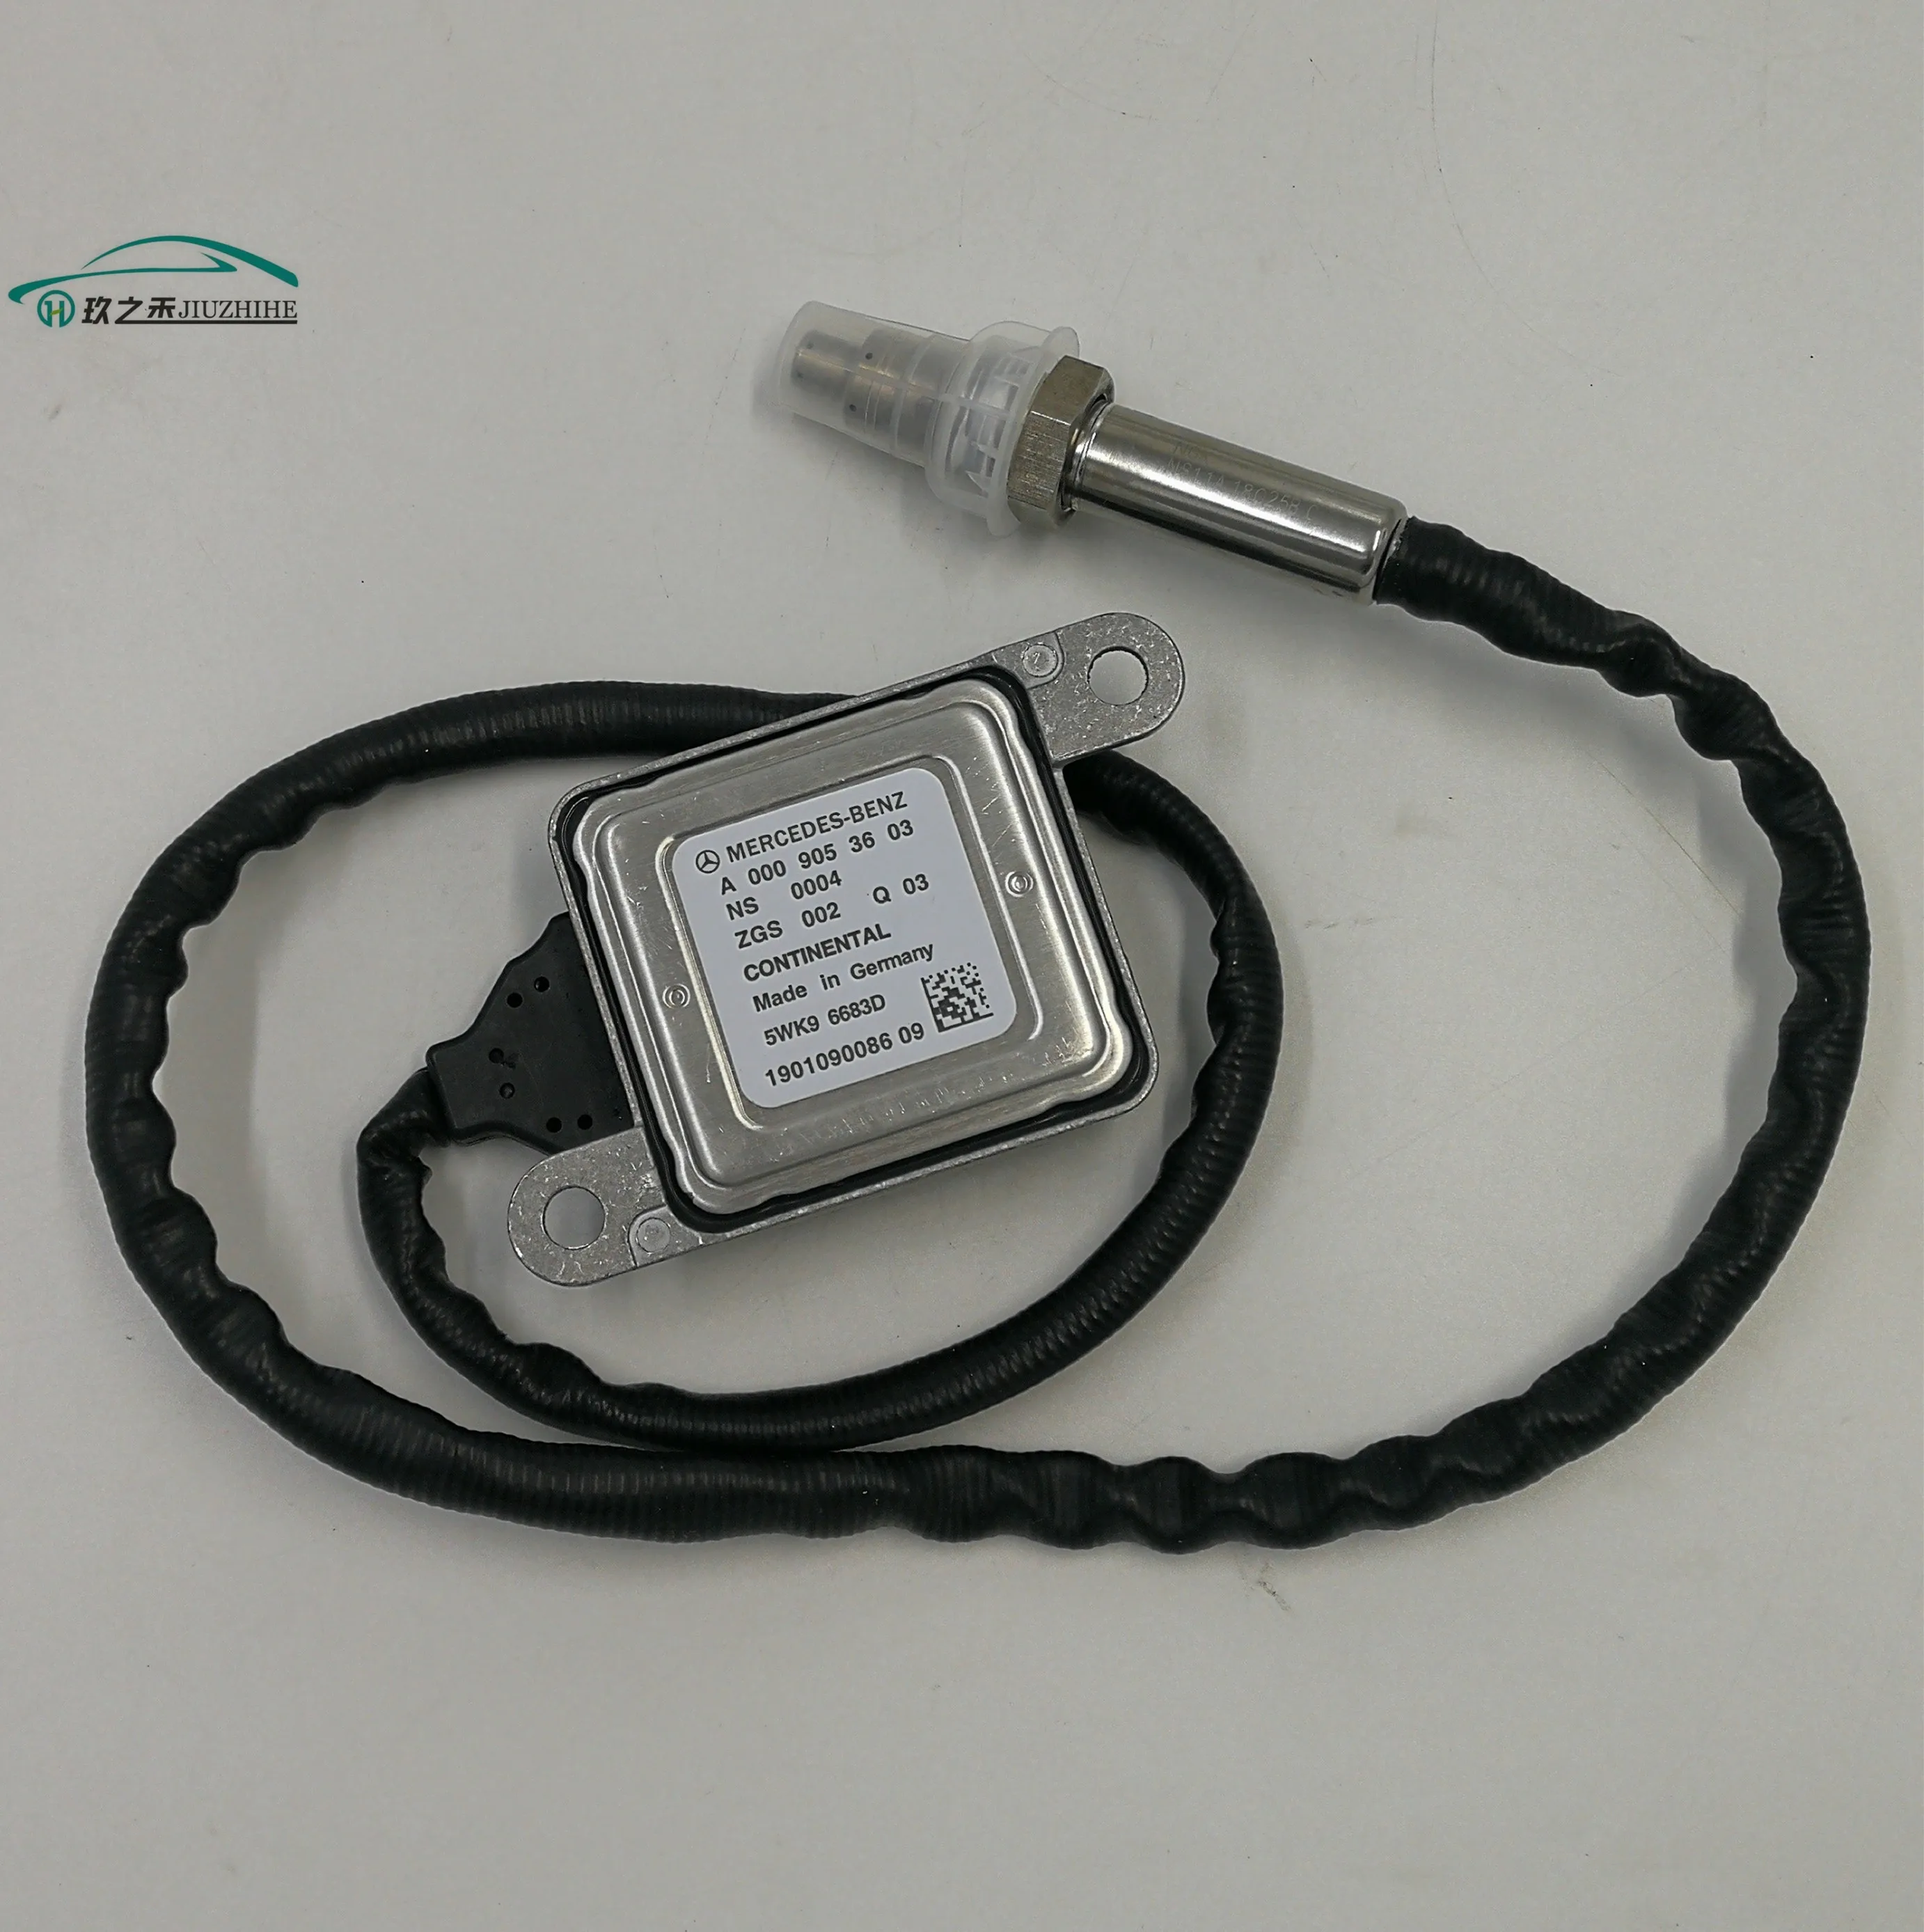 Nitrogrn Oxygen sensor A0009053603 of Germany ZGS 002 Q 03